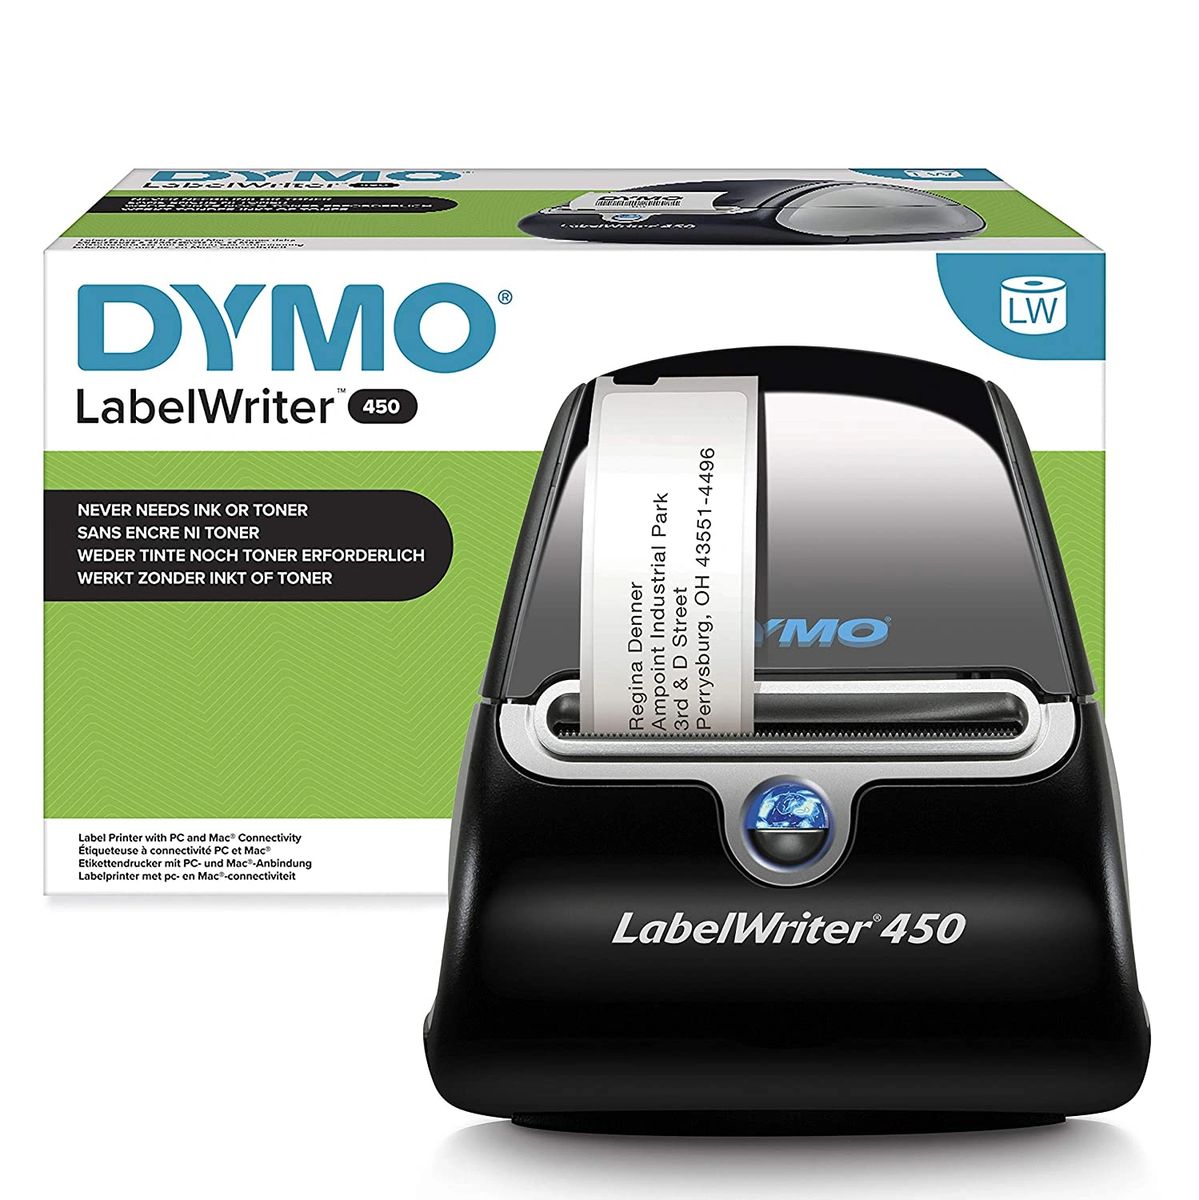 DYMO LabelWriter 450, Thermal Label Printer, Prints 51 Labels per